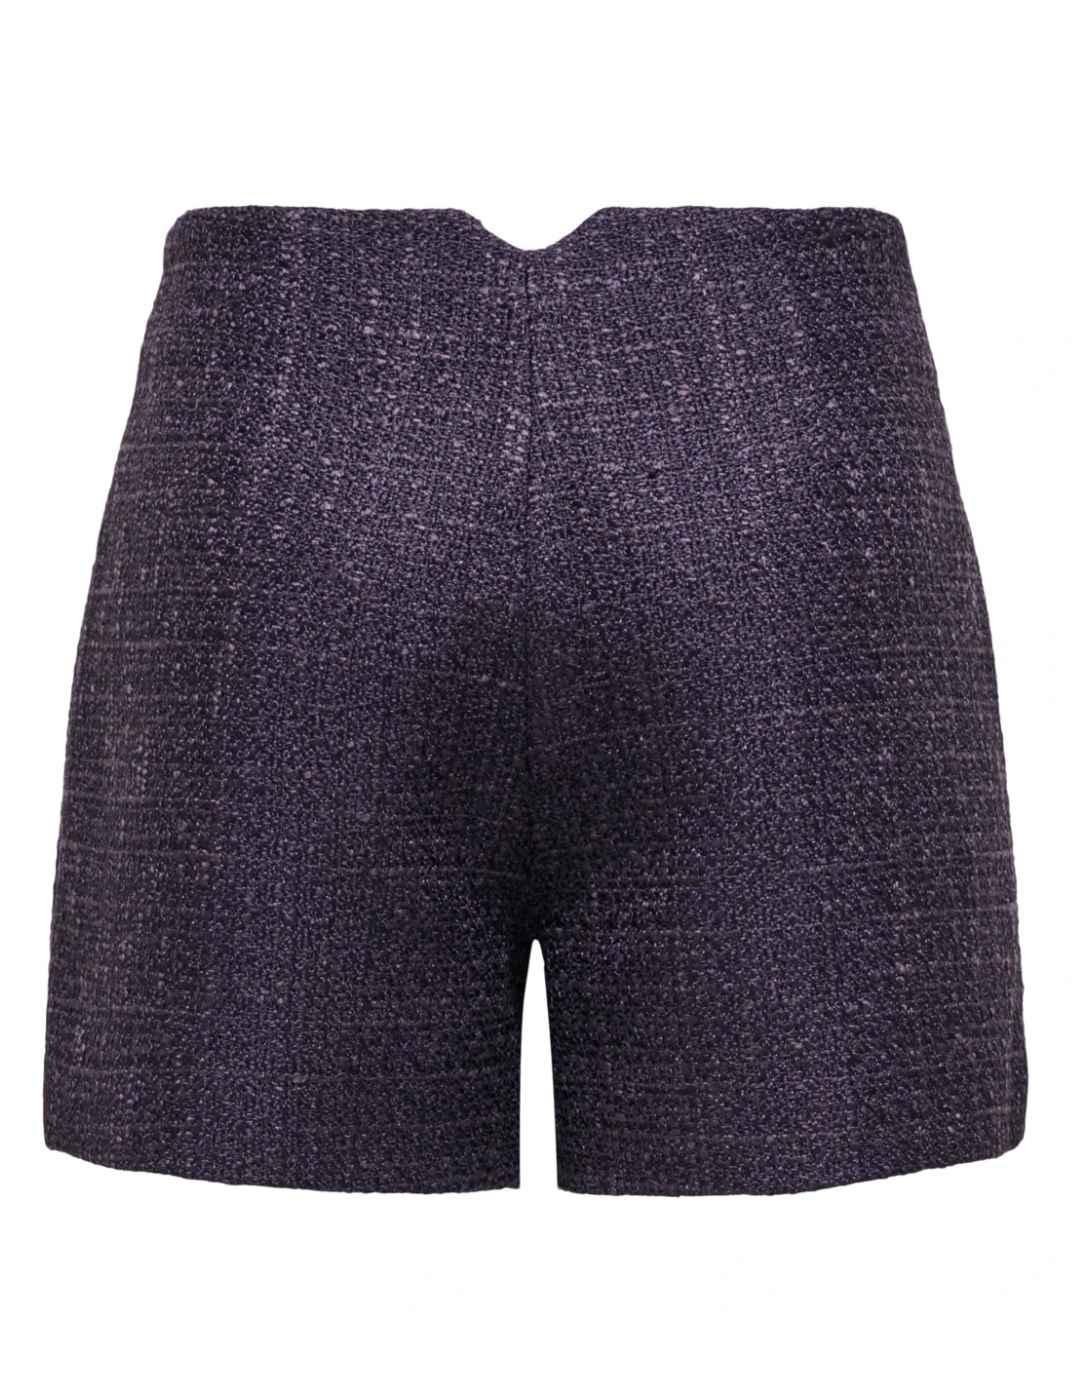 Pantalón corto Only Avery tejido tweed morado de mujer